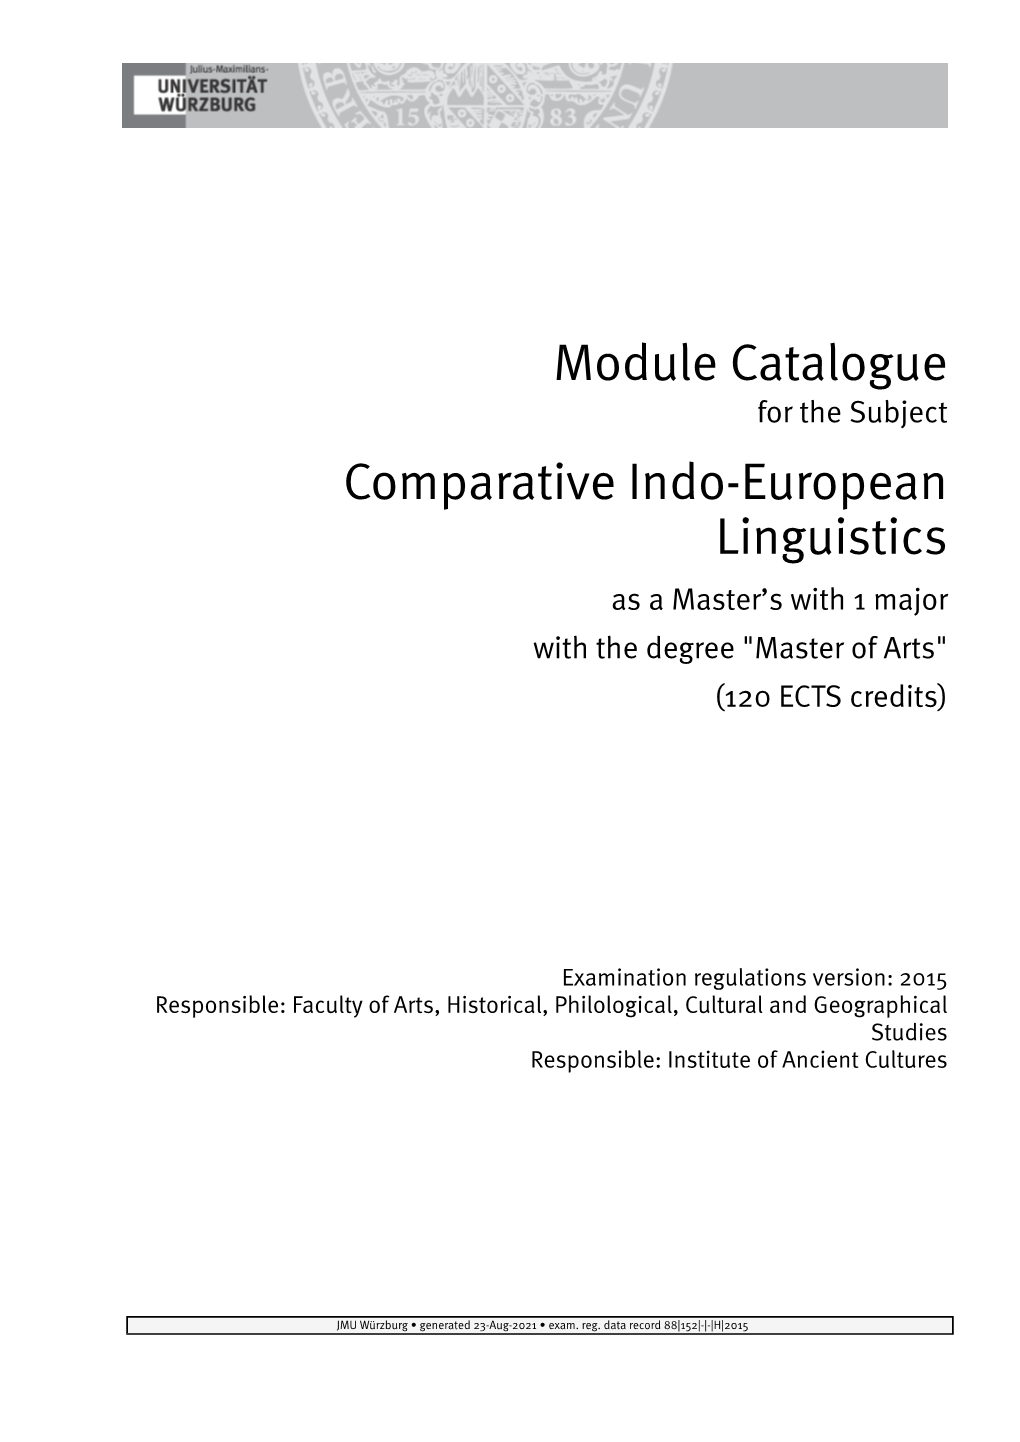 Module Catalogue Comparative Indo-European Linguistics